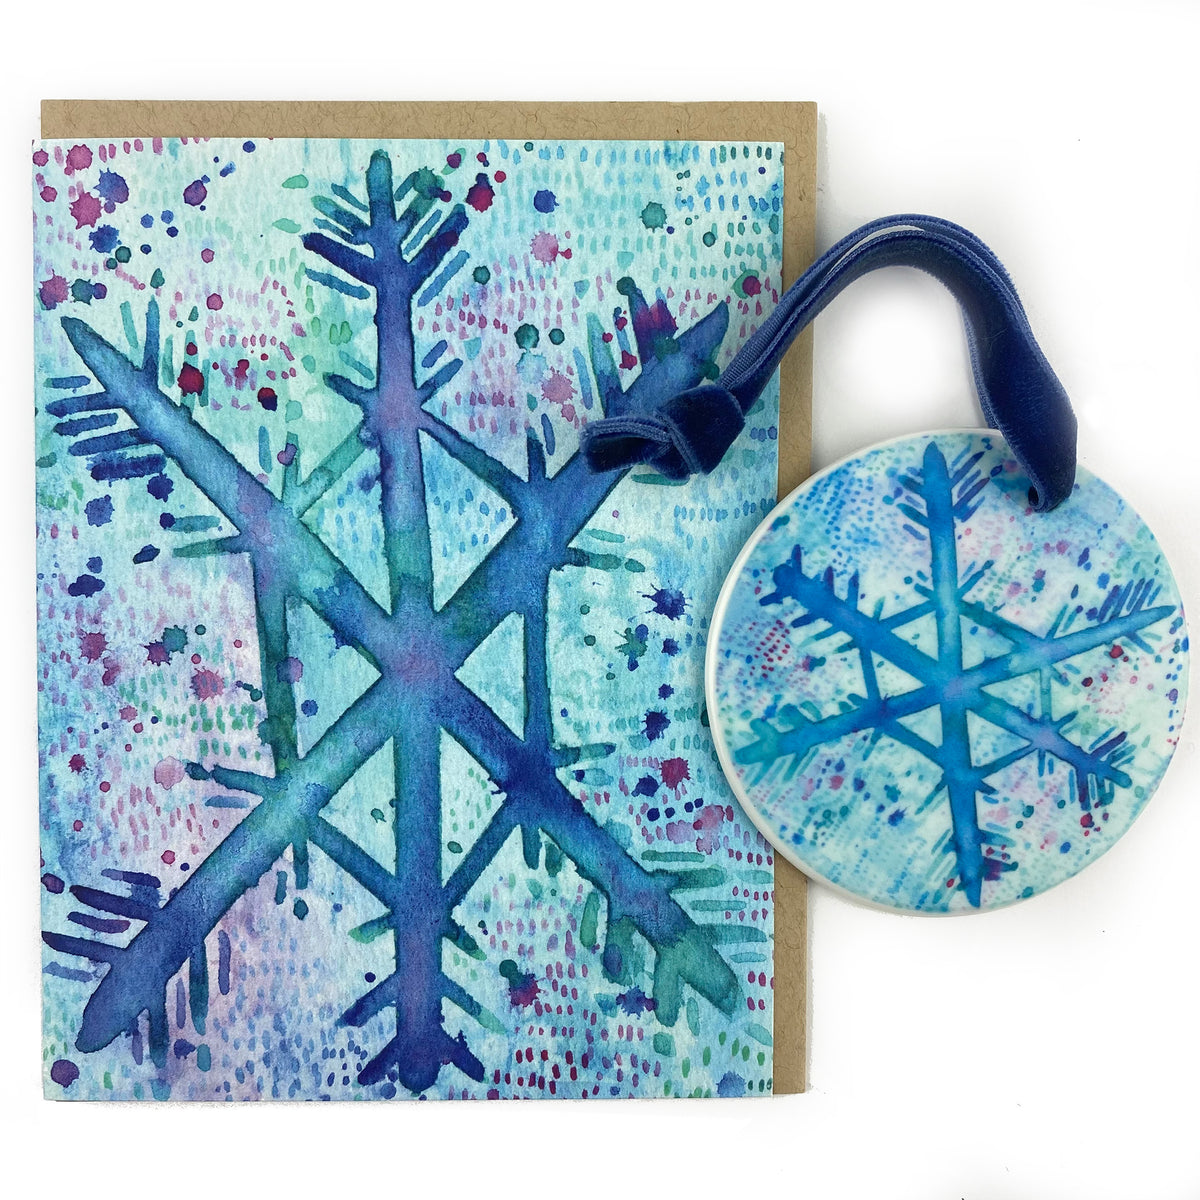 Ceramic Ornament with Blue Snowflake Print